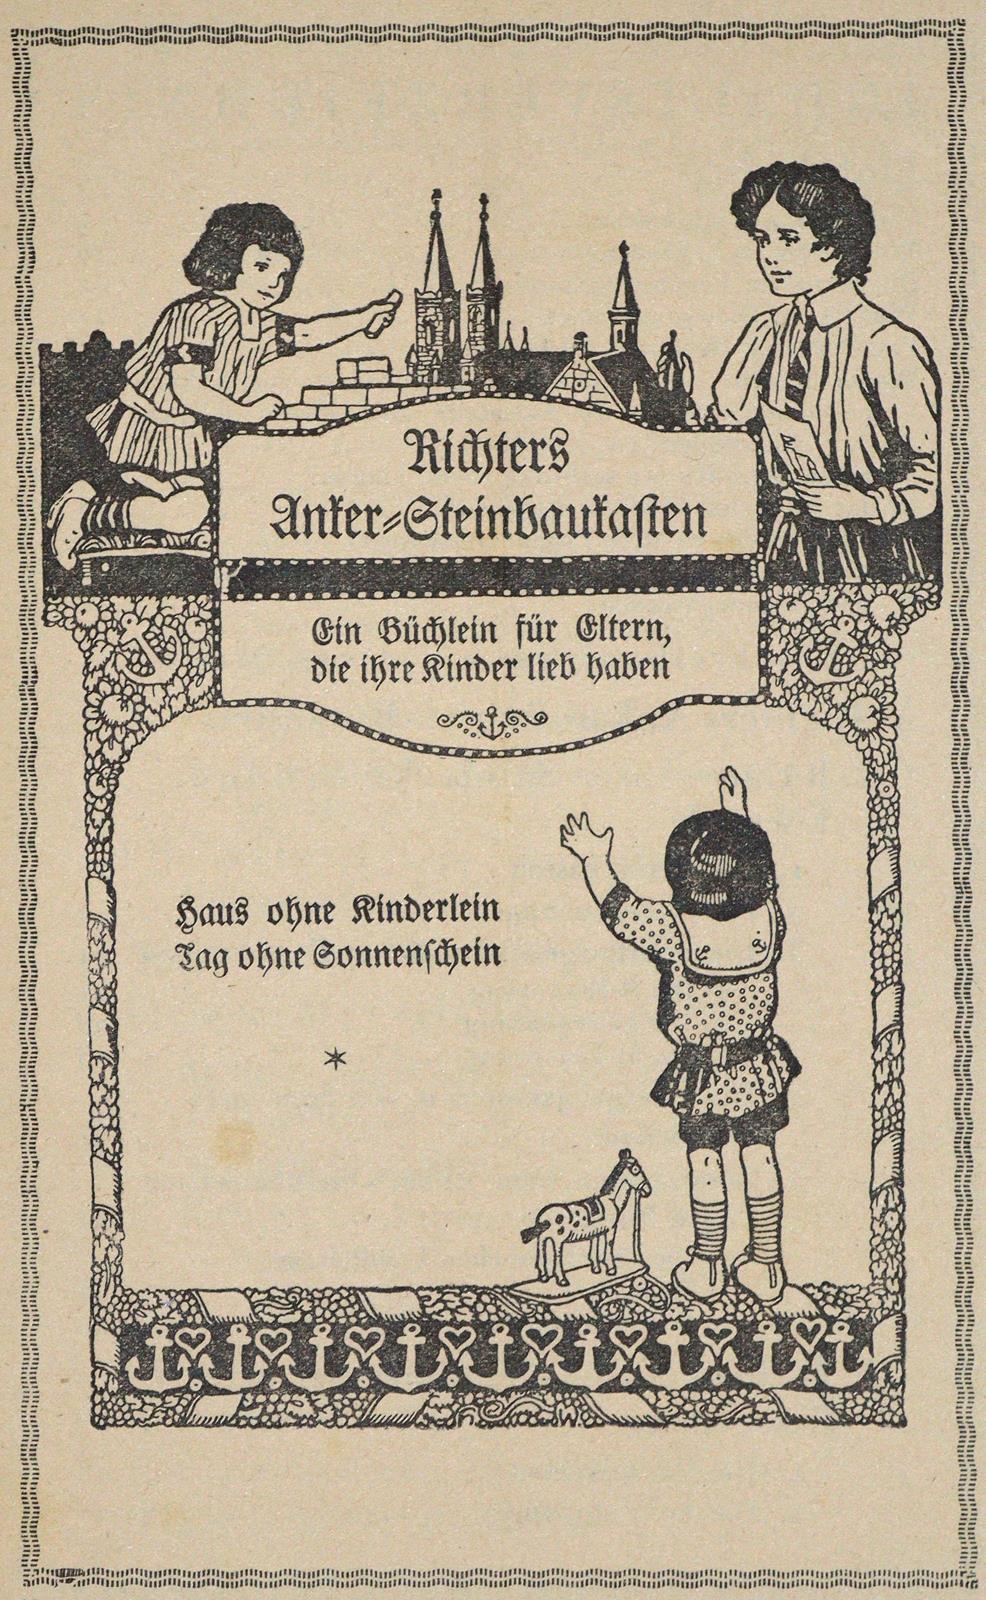 Anker-Zeitung. | Bild Nr.2